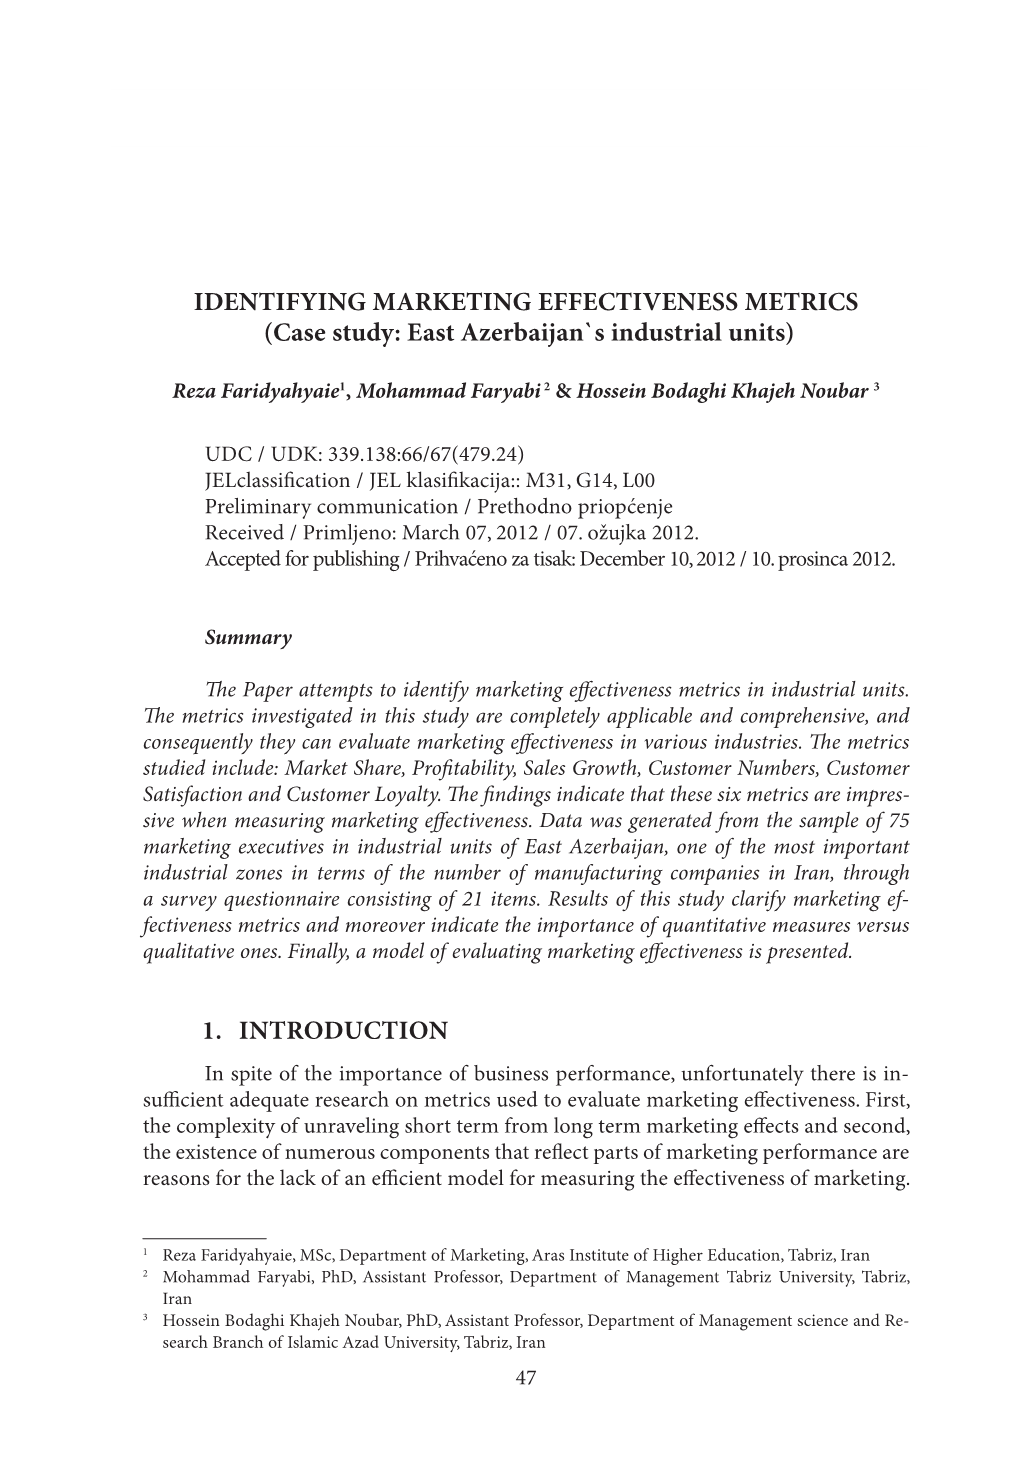 IDENTIFYING MARKETING EFFECTIVENESS METRICS (Case Study: East Azerbaijan`S Industrial Units)